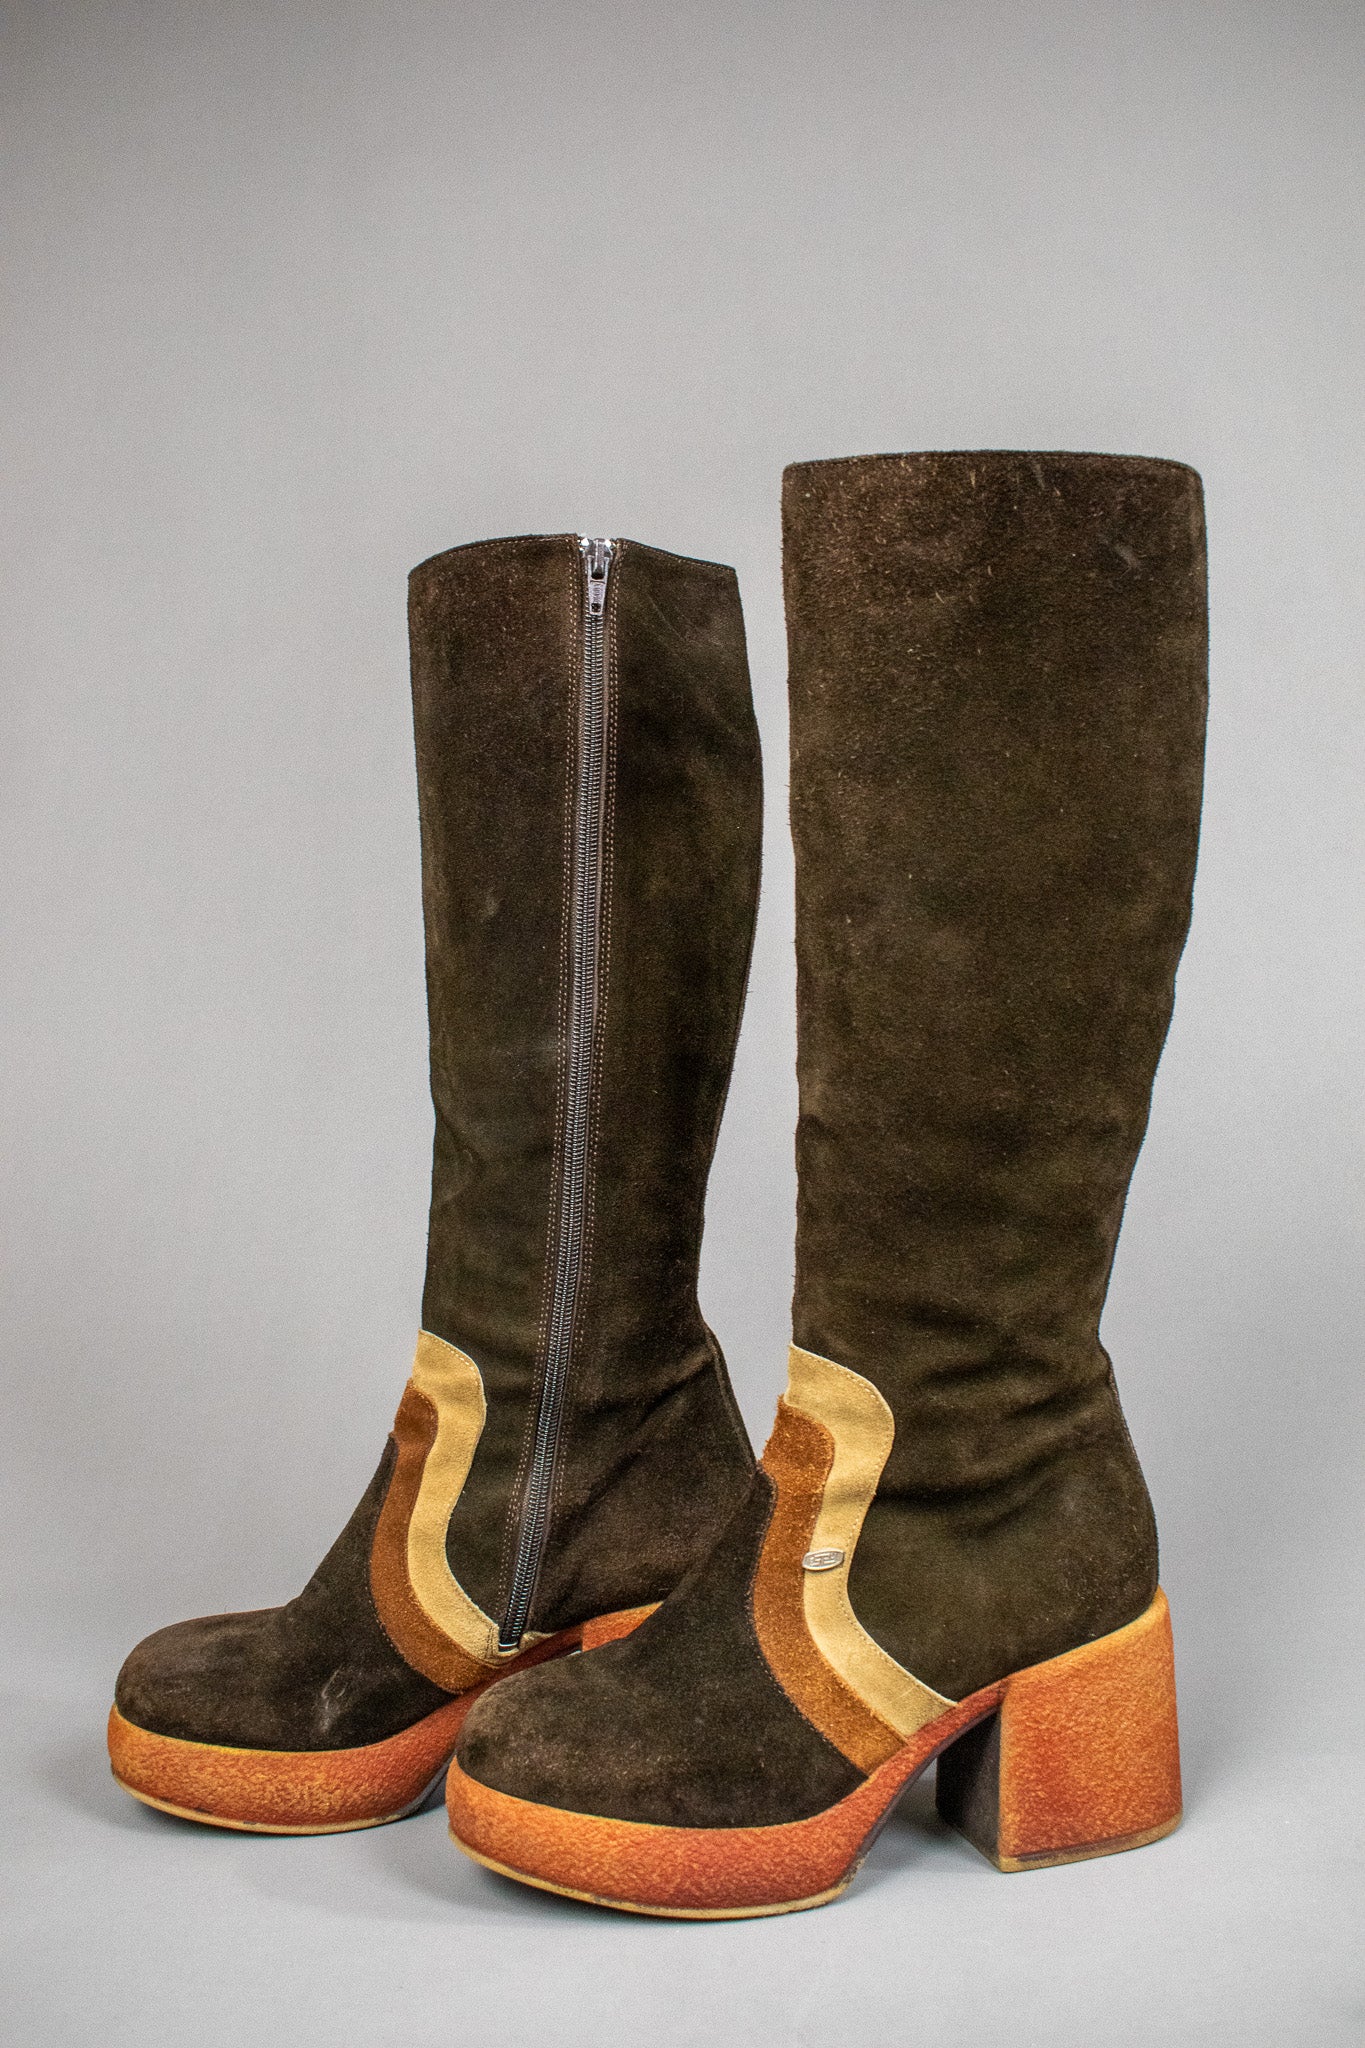 Vintage Iconic 1970s Suede Platform Boots